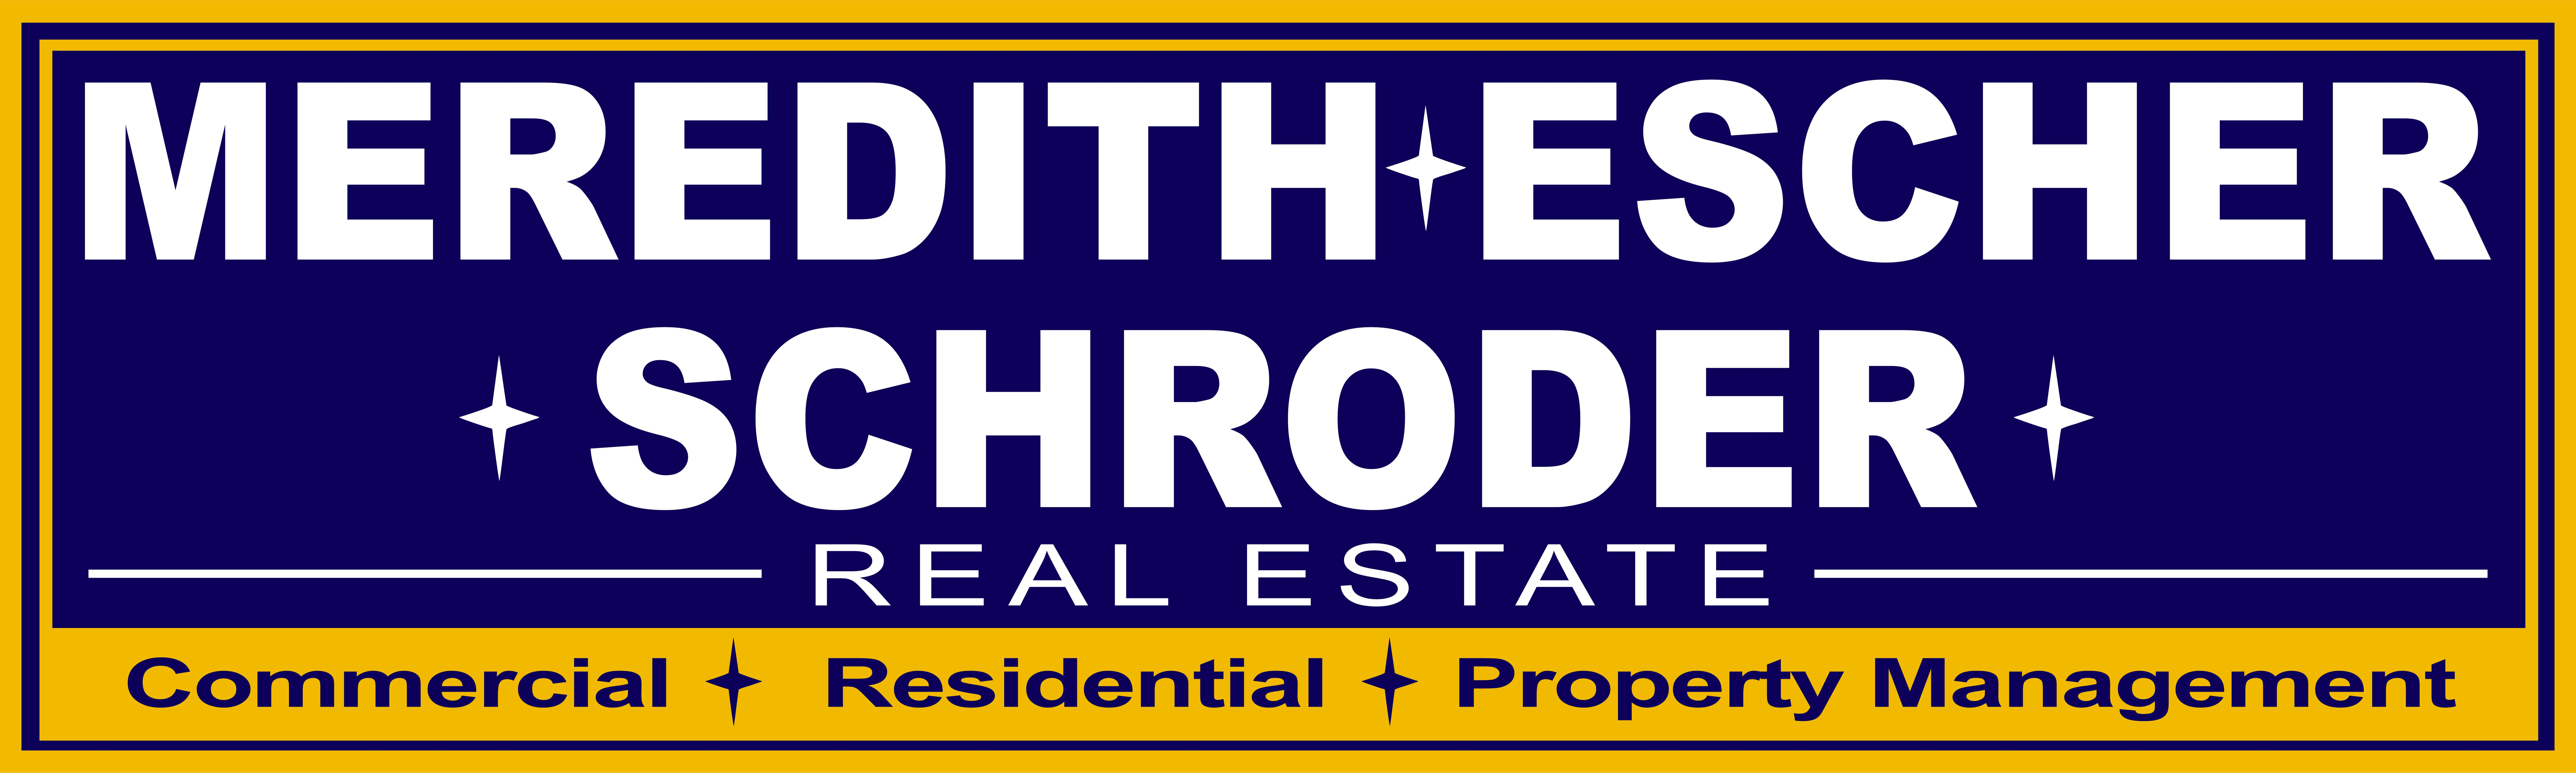 Meredith Escher Schroder Real Estate